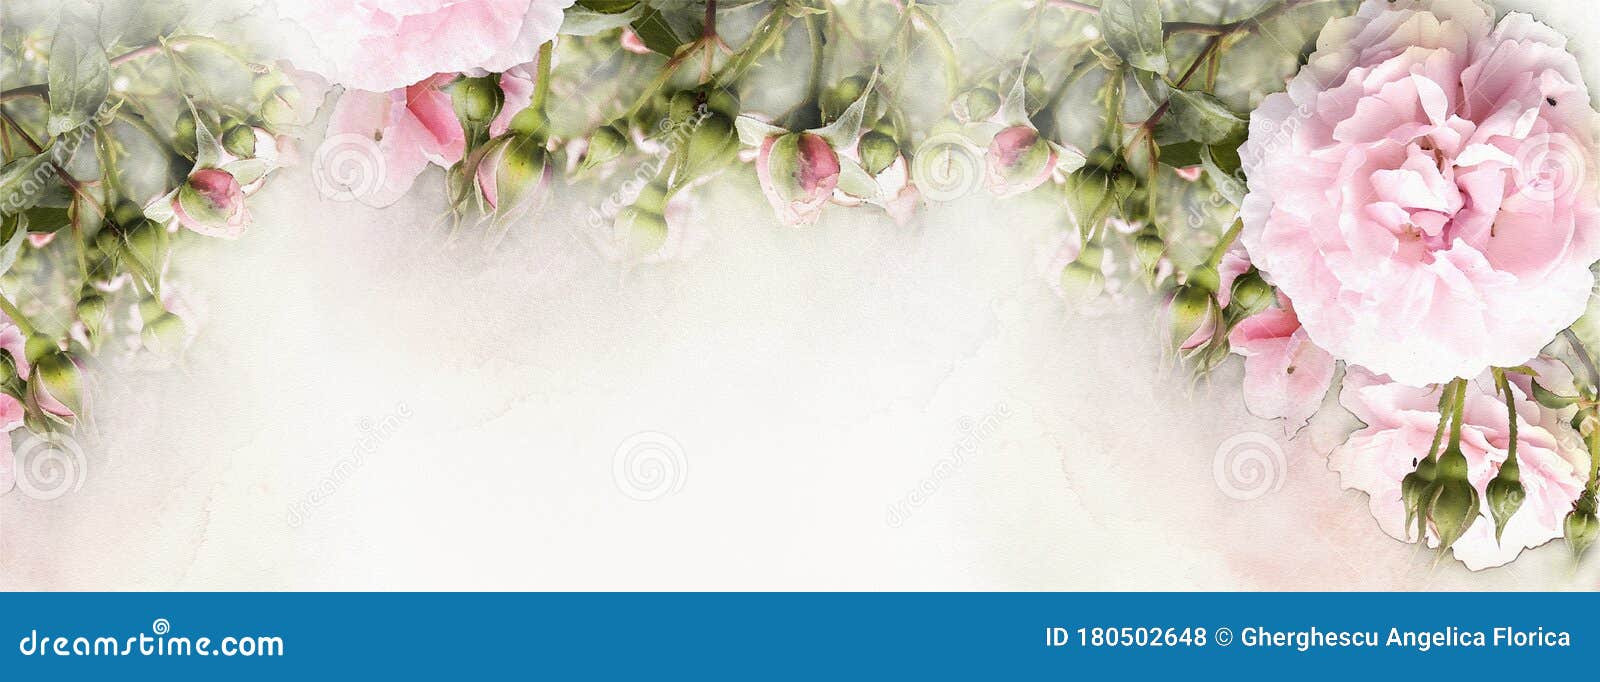 Watercolor Vintage Roses Background on Old Paper - Facebook Cover Stock  Illustration - Illustration of cover, banner: 180502648